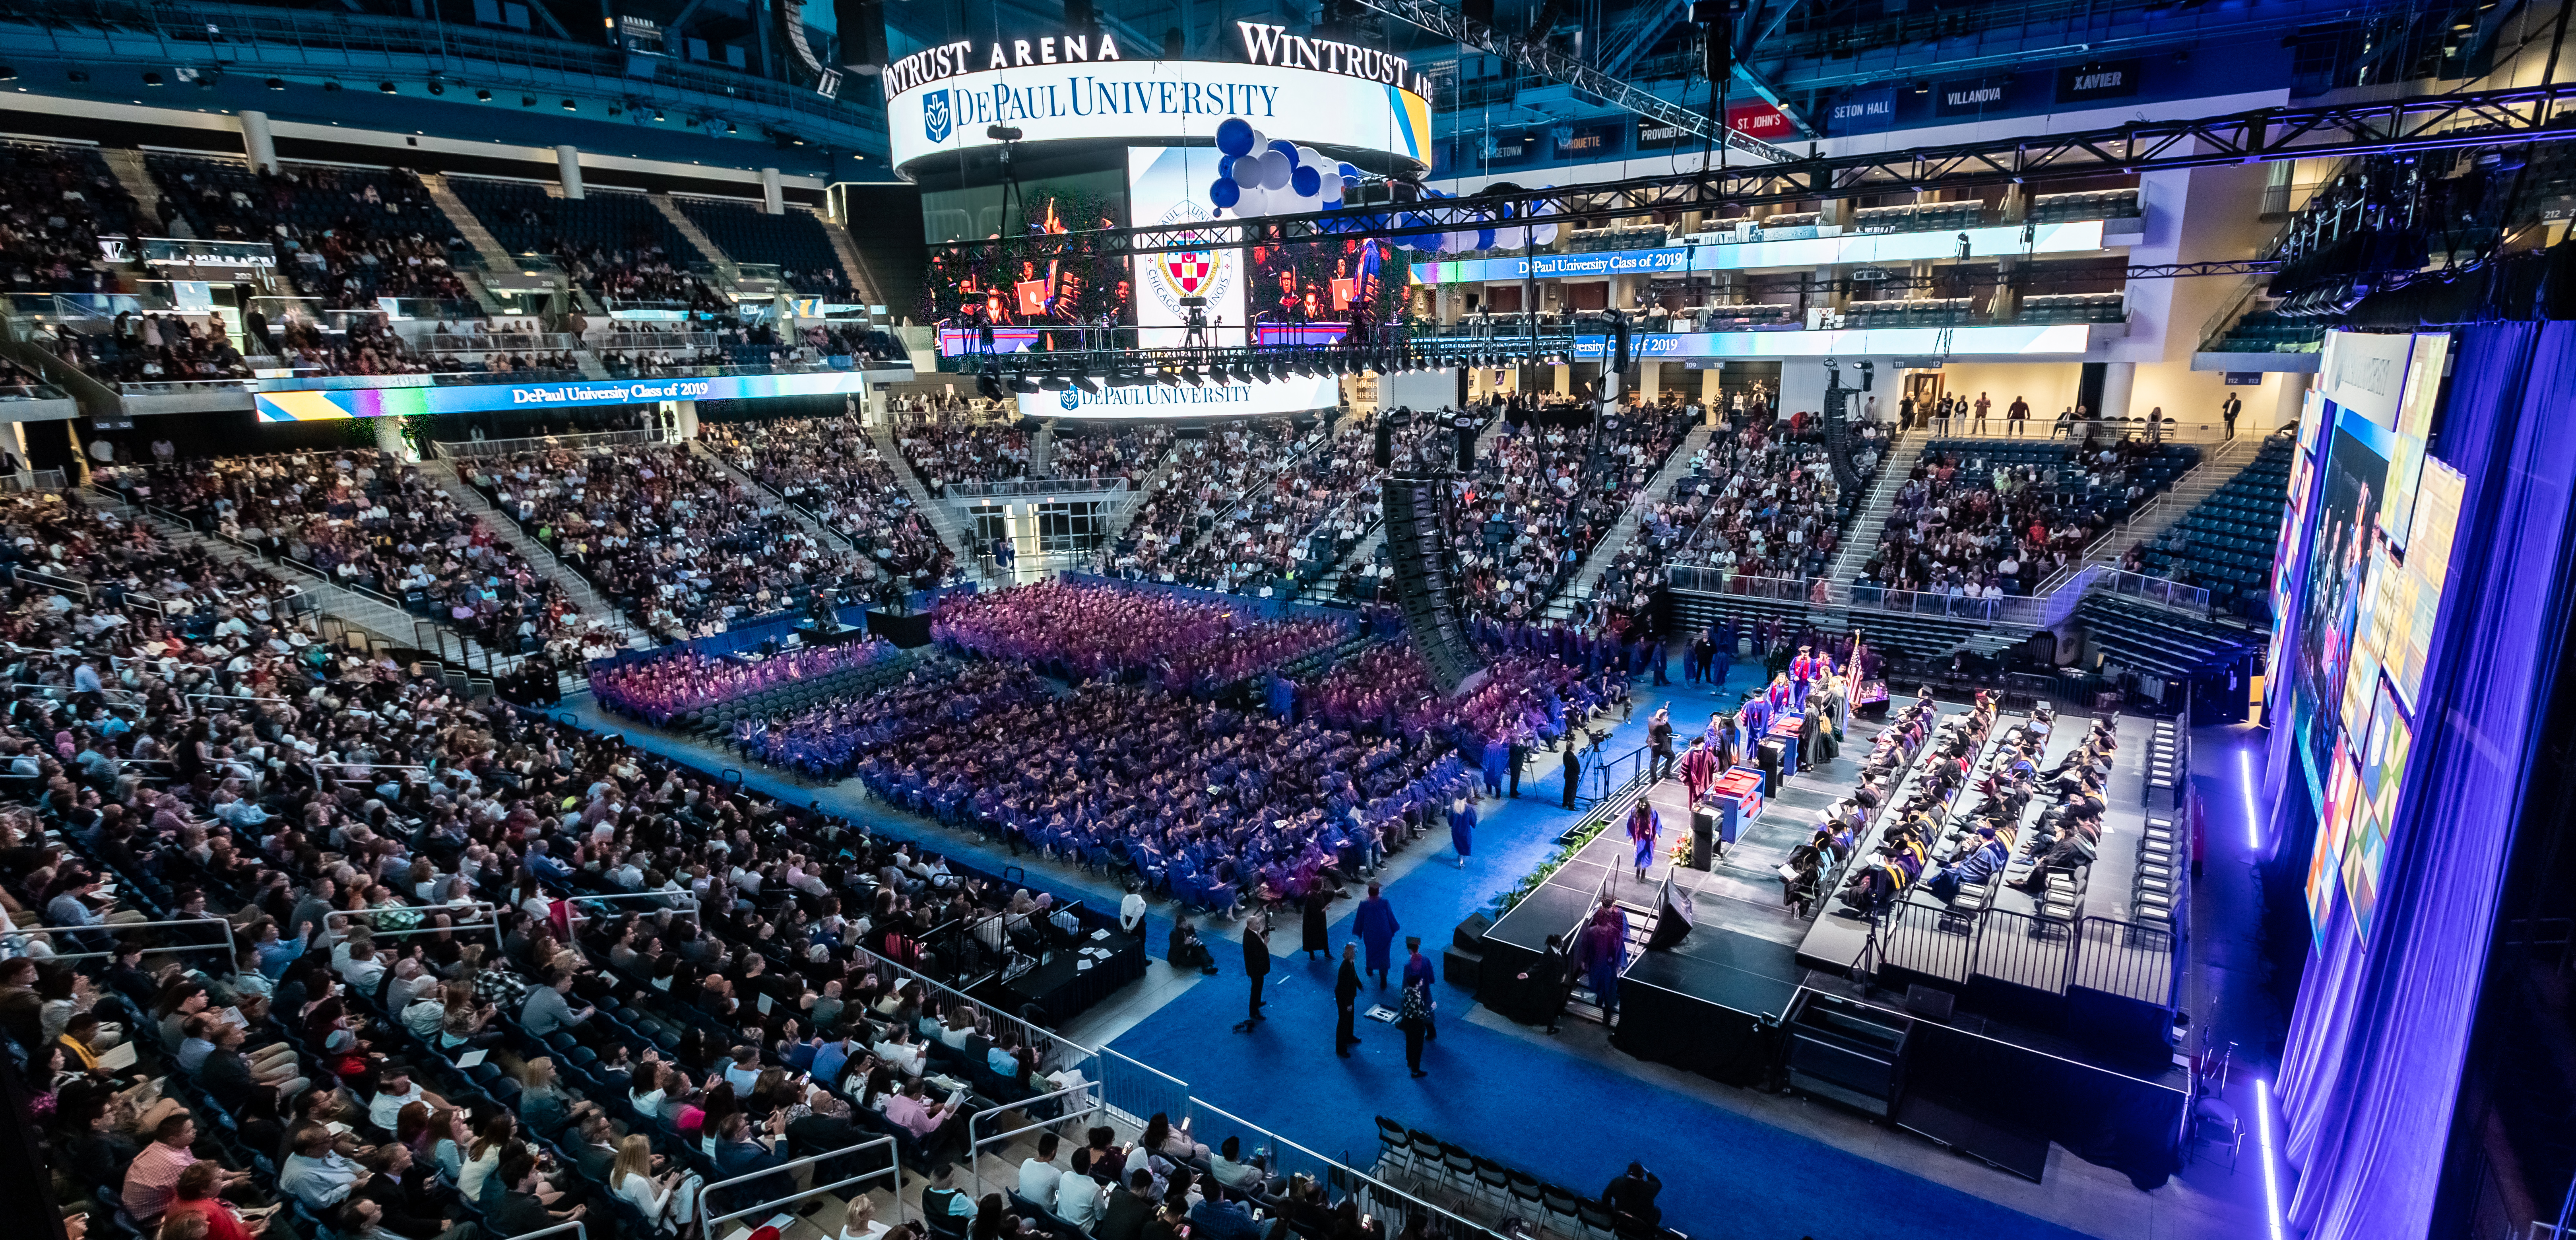 DePaul's graduation ceremony at Wintrust Arena